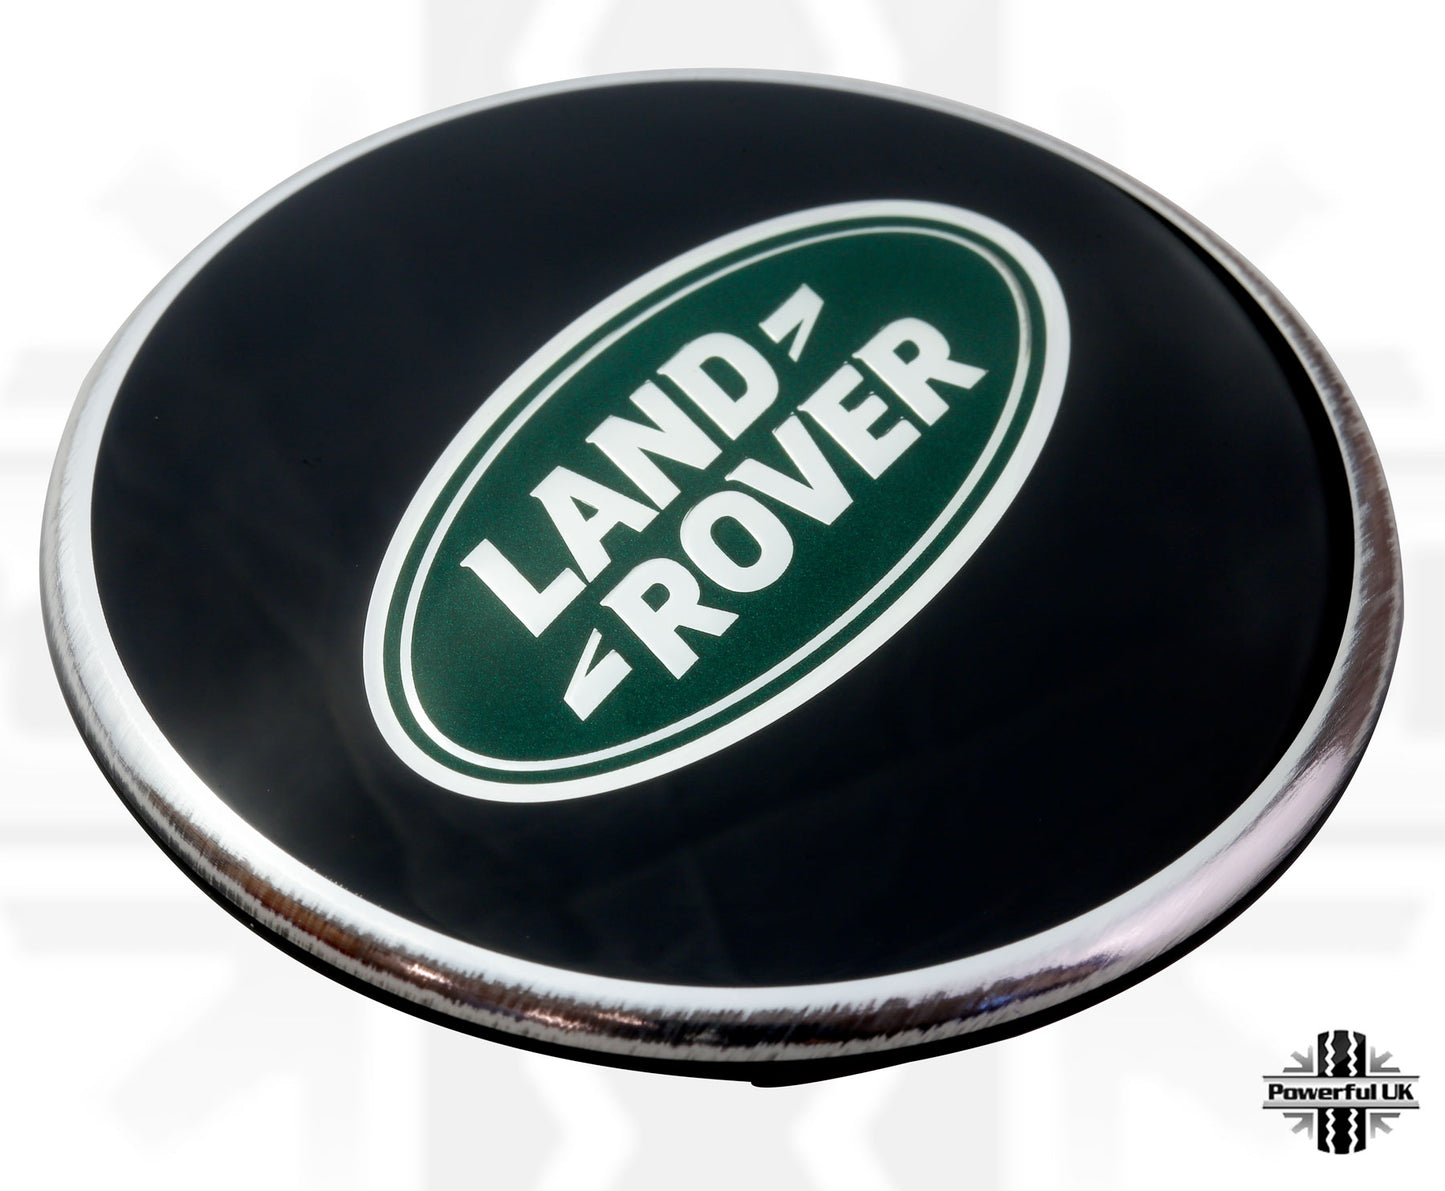 Genuine 4x Black Green Alloy Wheel Center Centre Caps for Range Rover Evoque